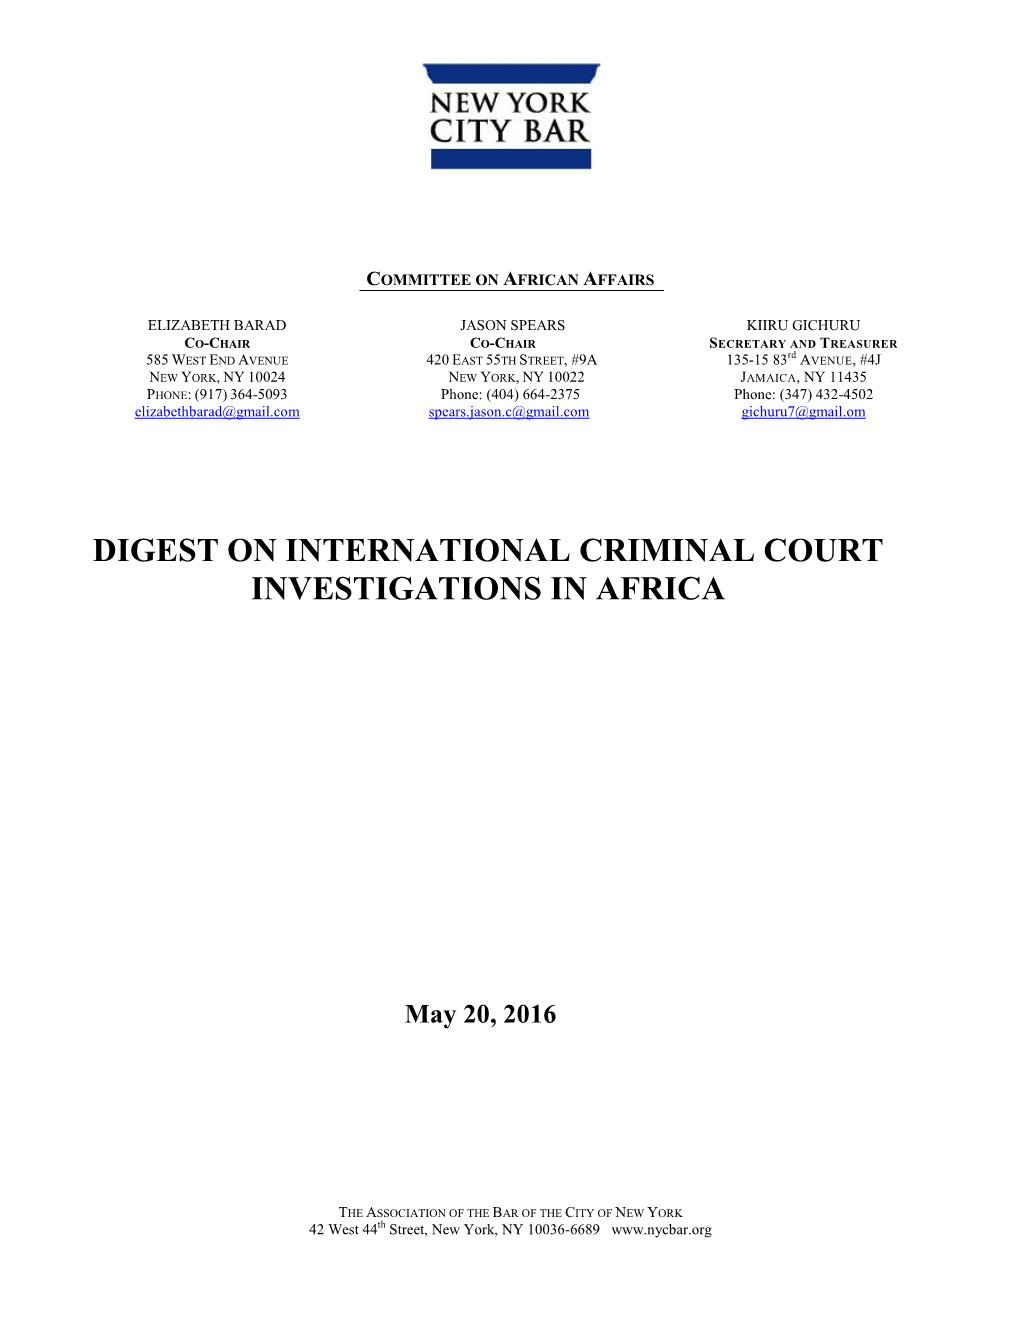 Digest on International Criminal Court Investigations in Africa